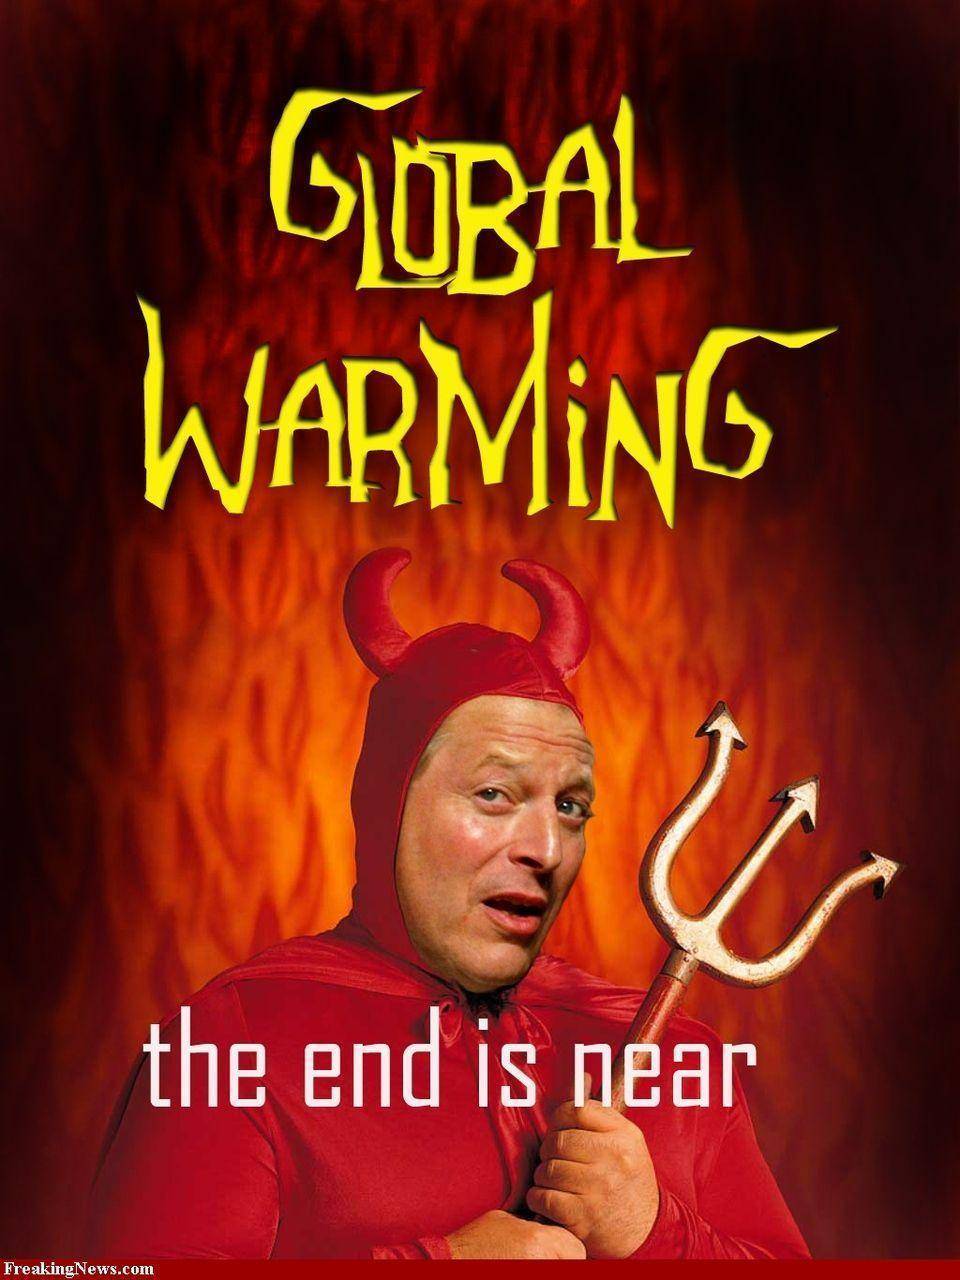 al-gore-global-warming.jpg